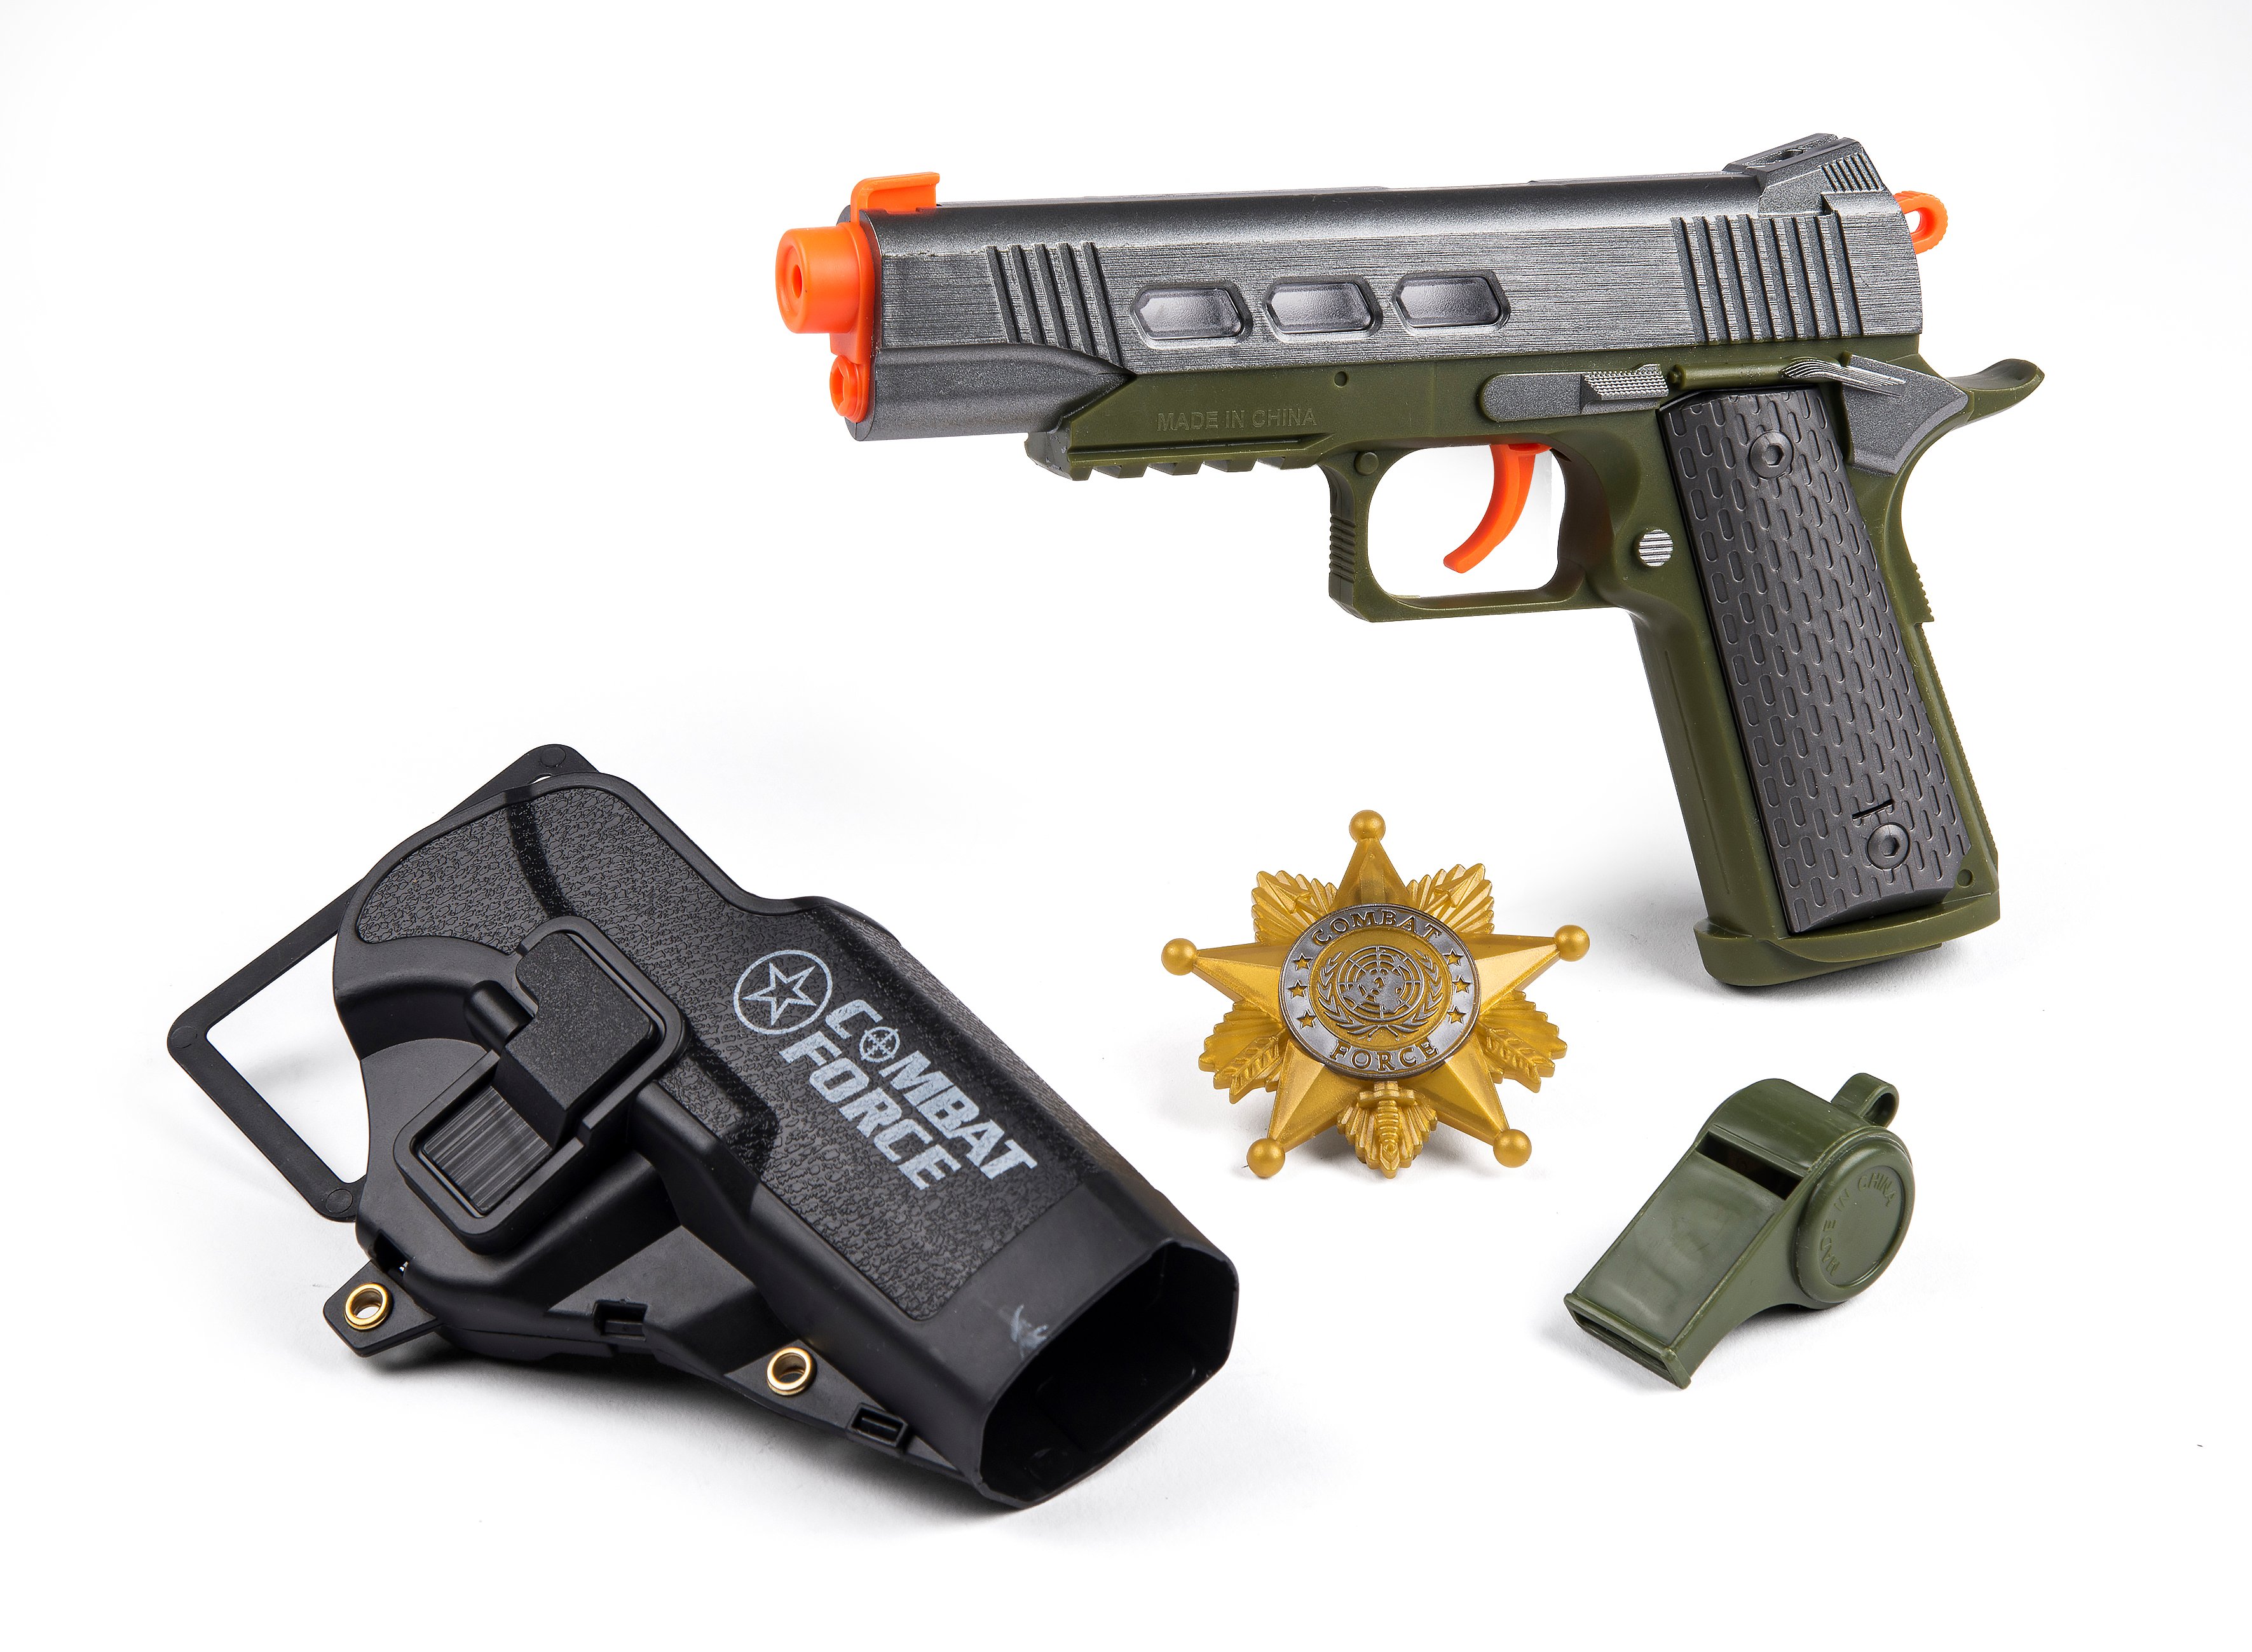 Gonher - Military pistol set (42208)